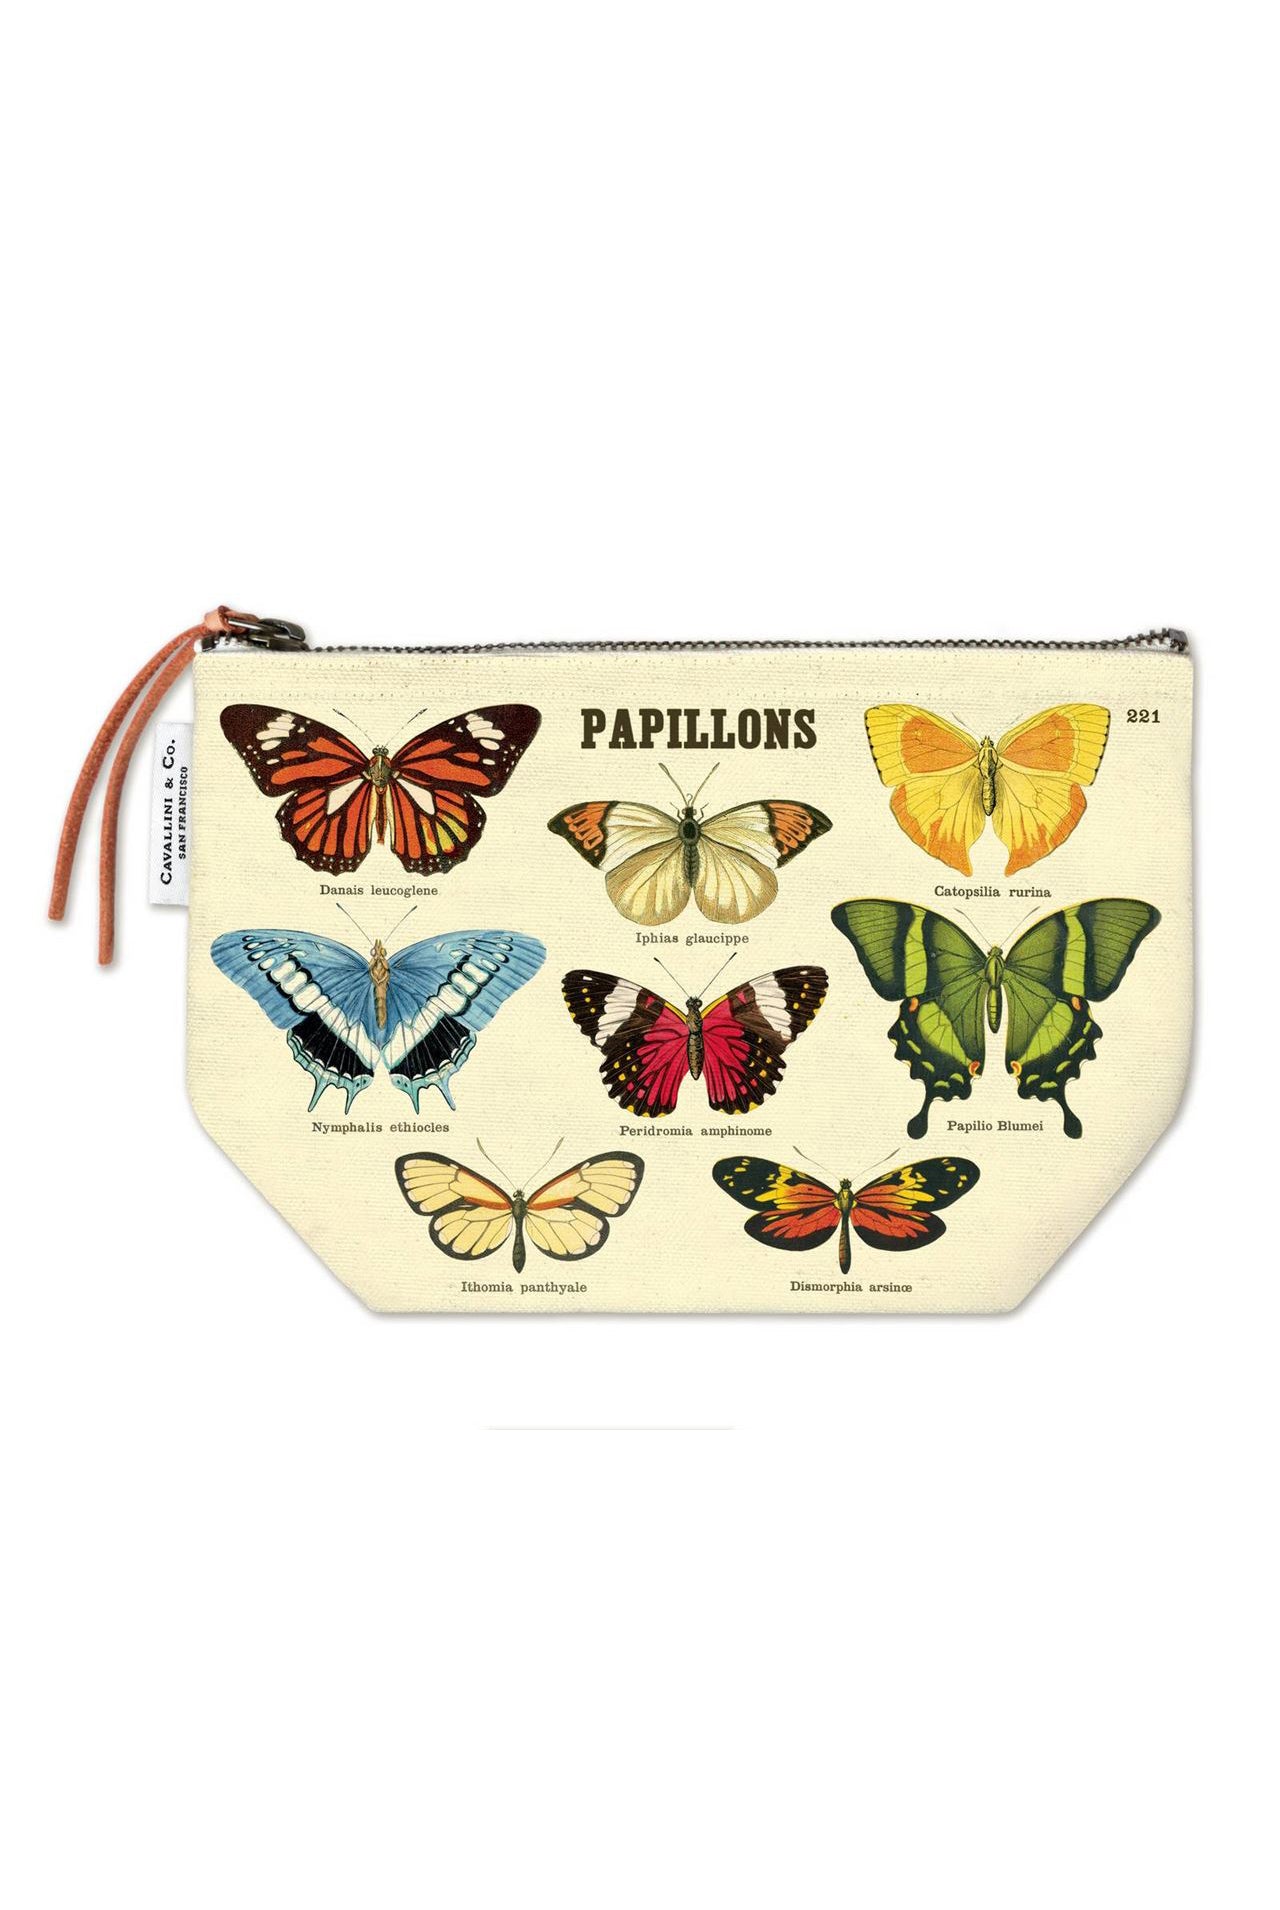 Cavallini & Co - Butterflies Vintage Pouch - Magpie Style